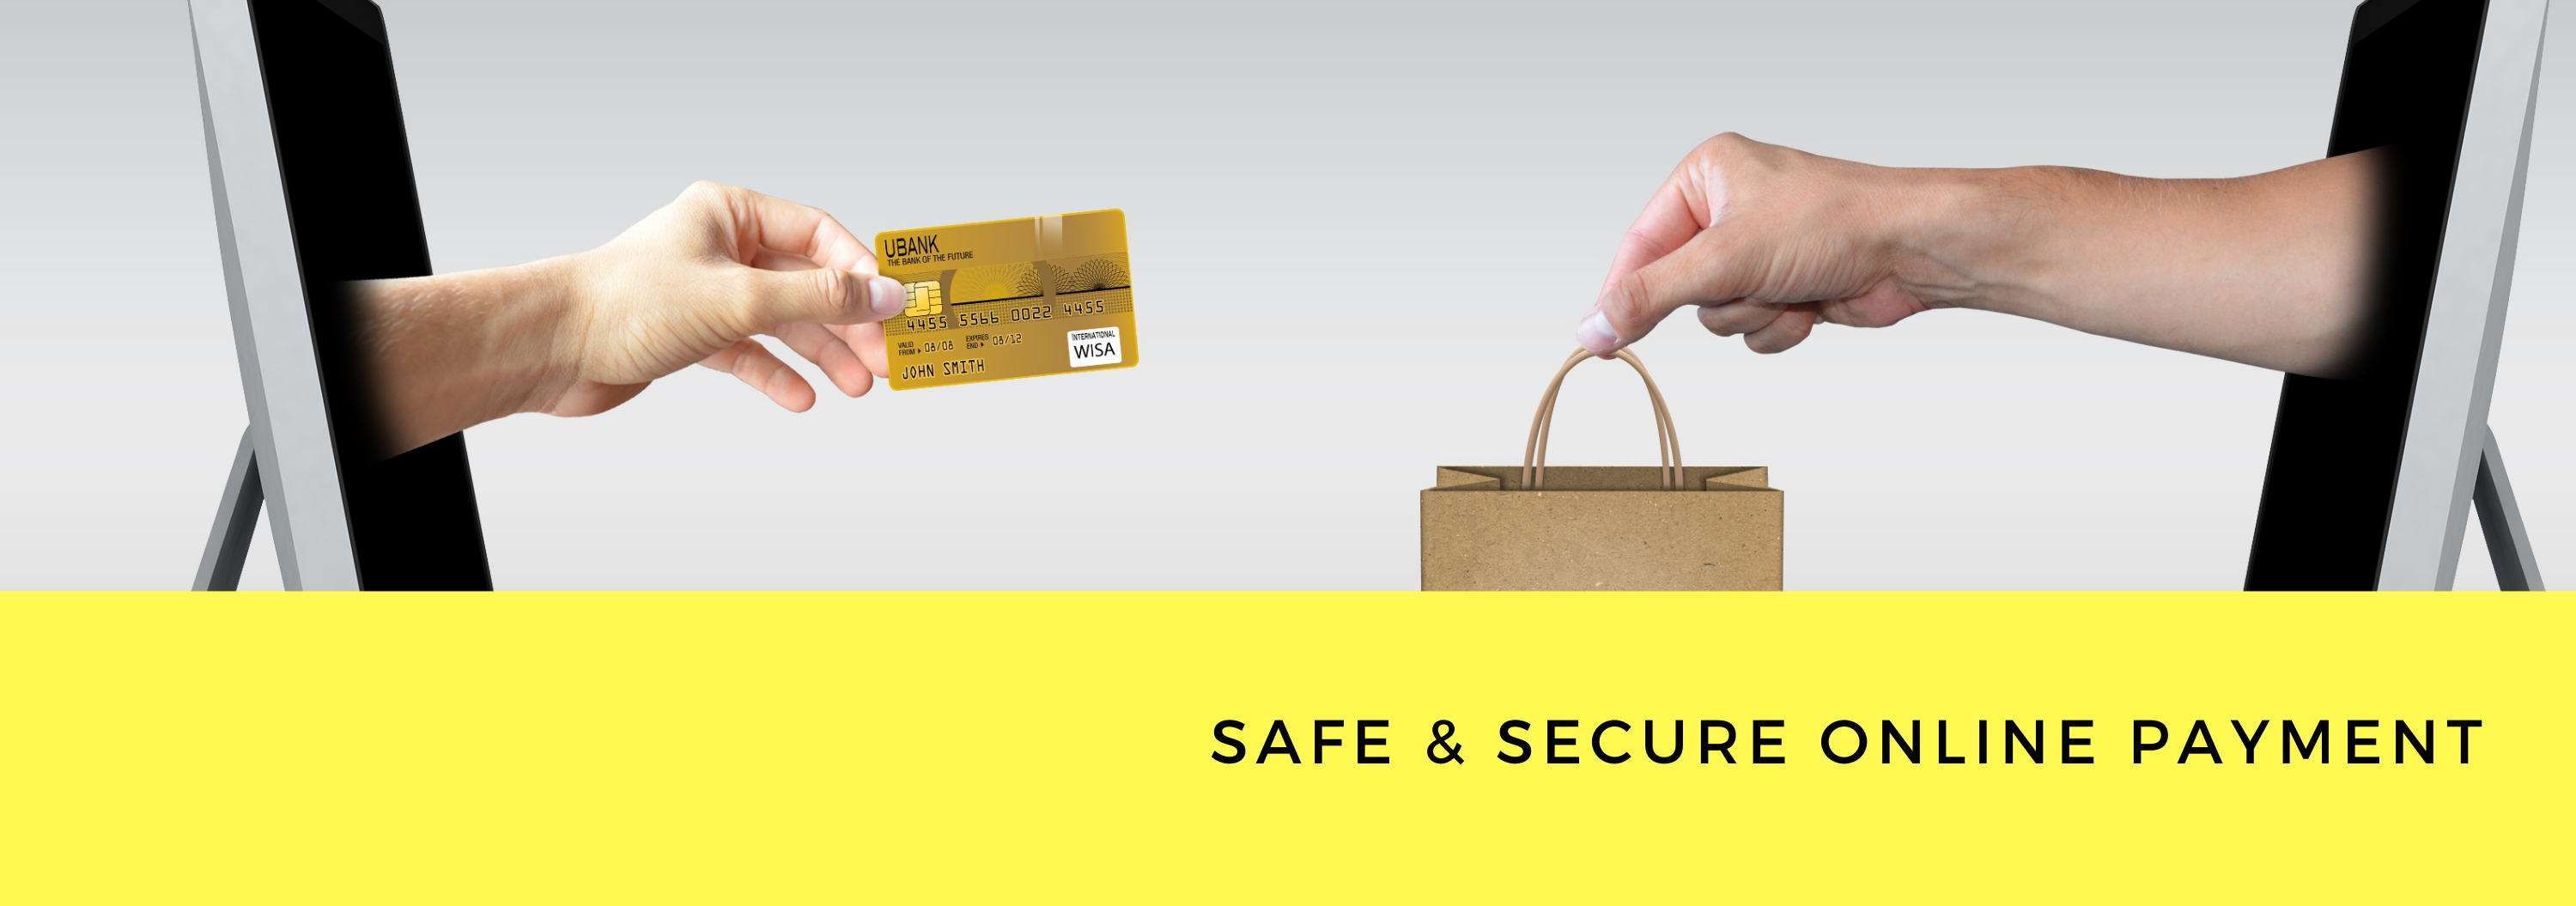 SAFE & SECURE ONLINE PAYMENT